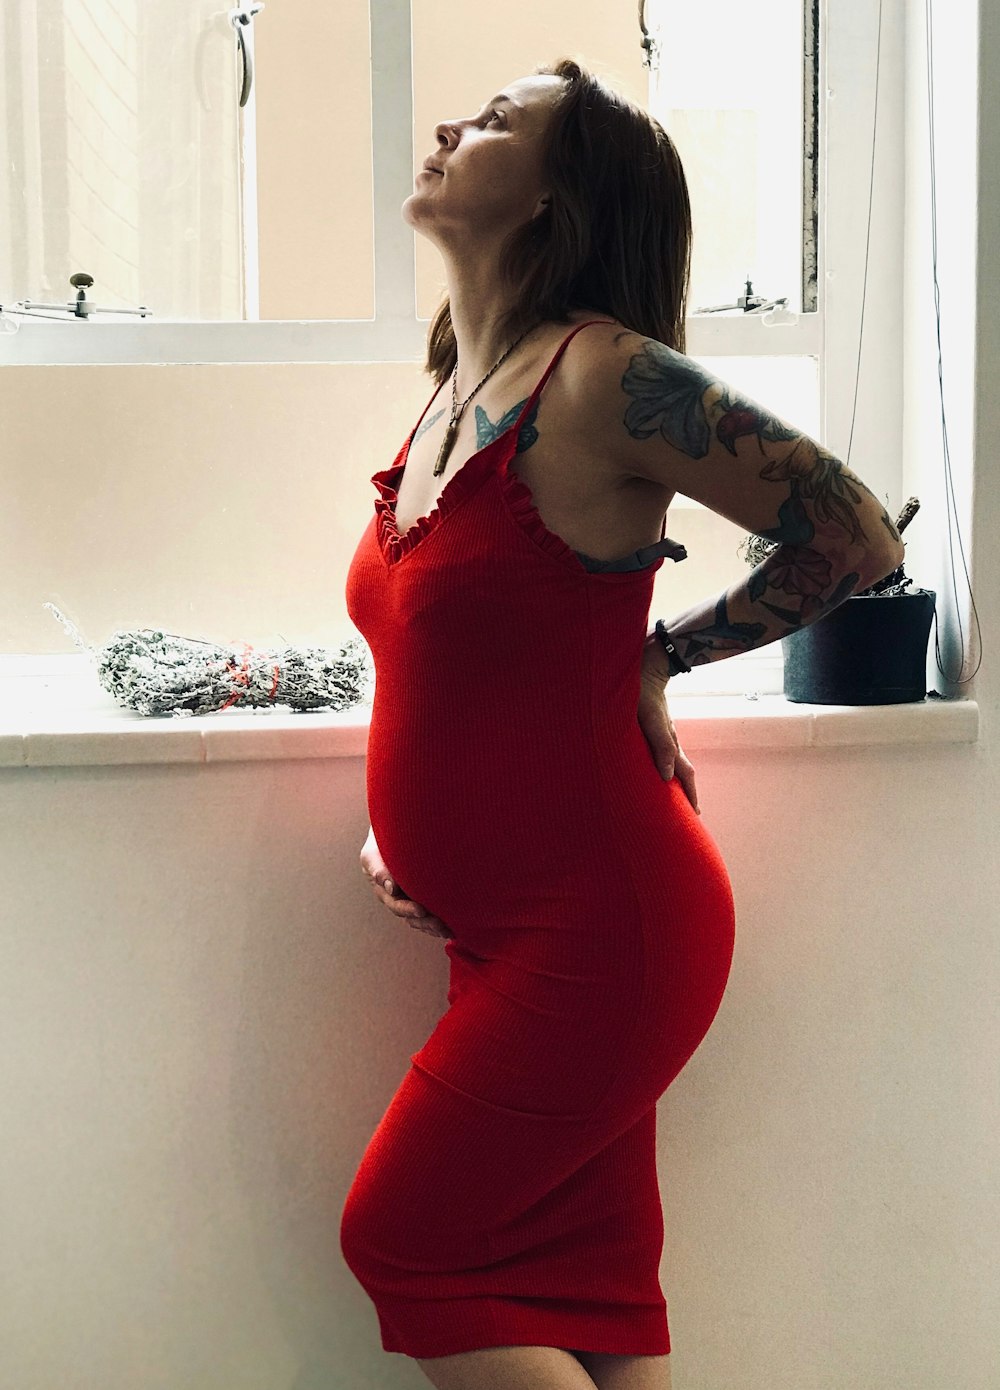 pregnant woman standing near window